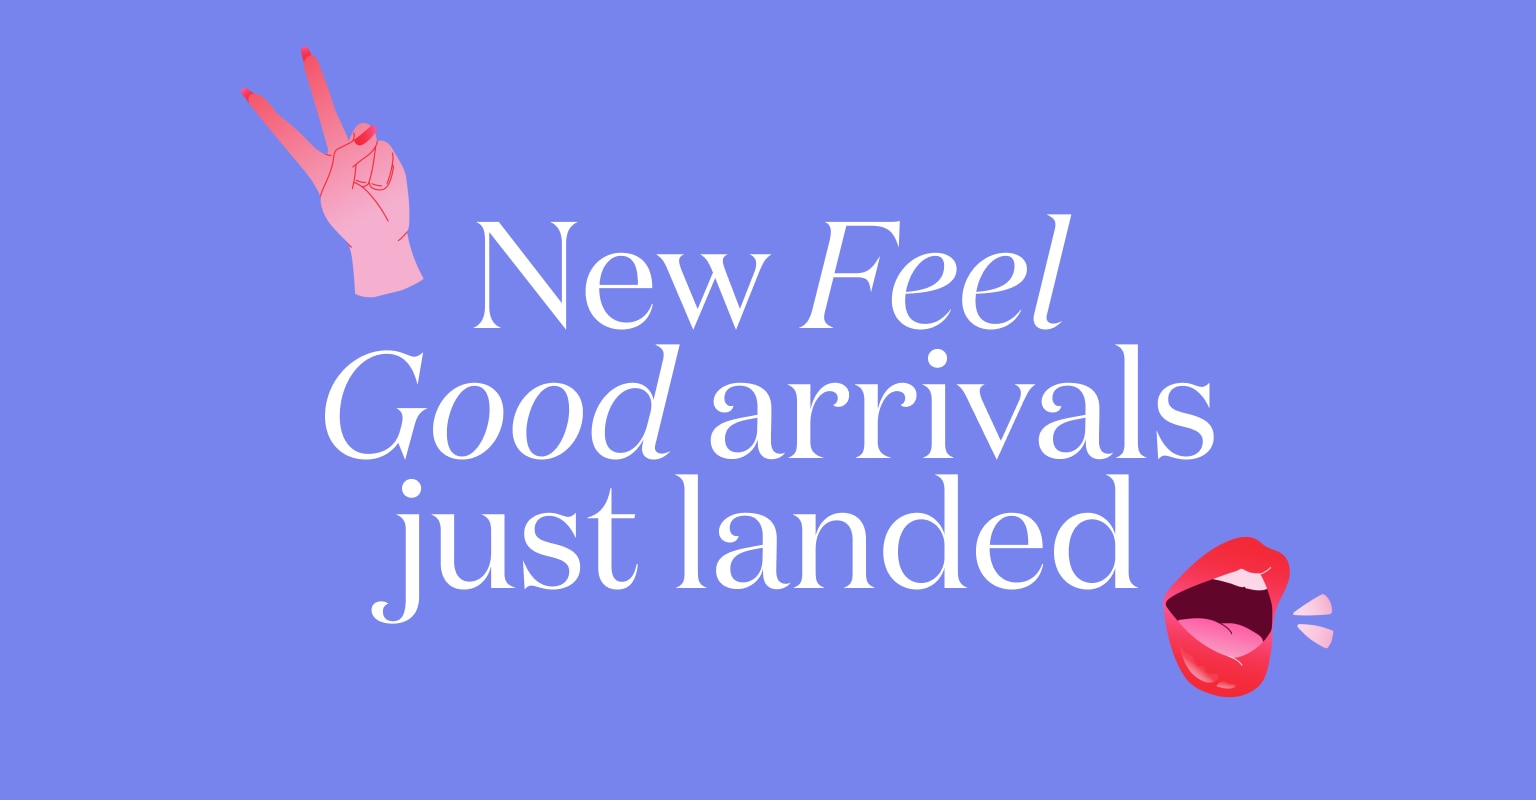 New Feel Good arrivals just landed.